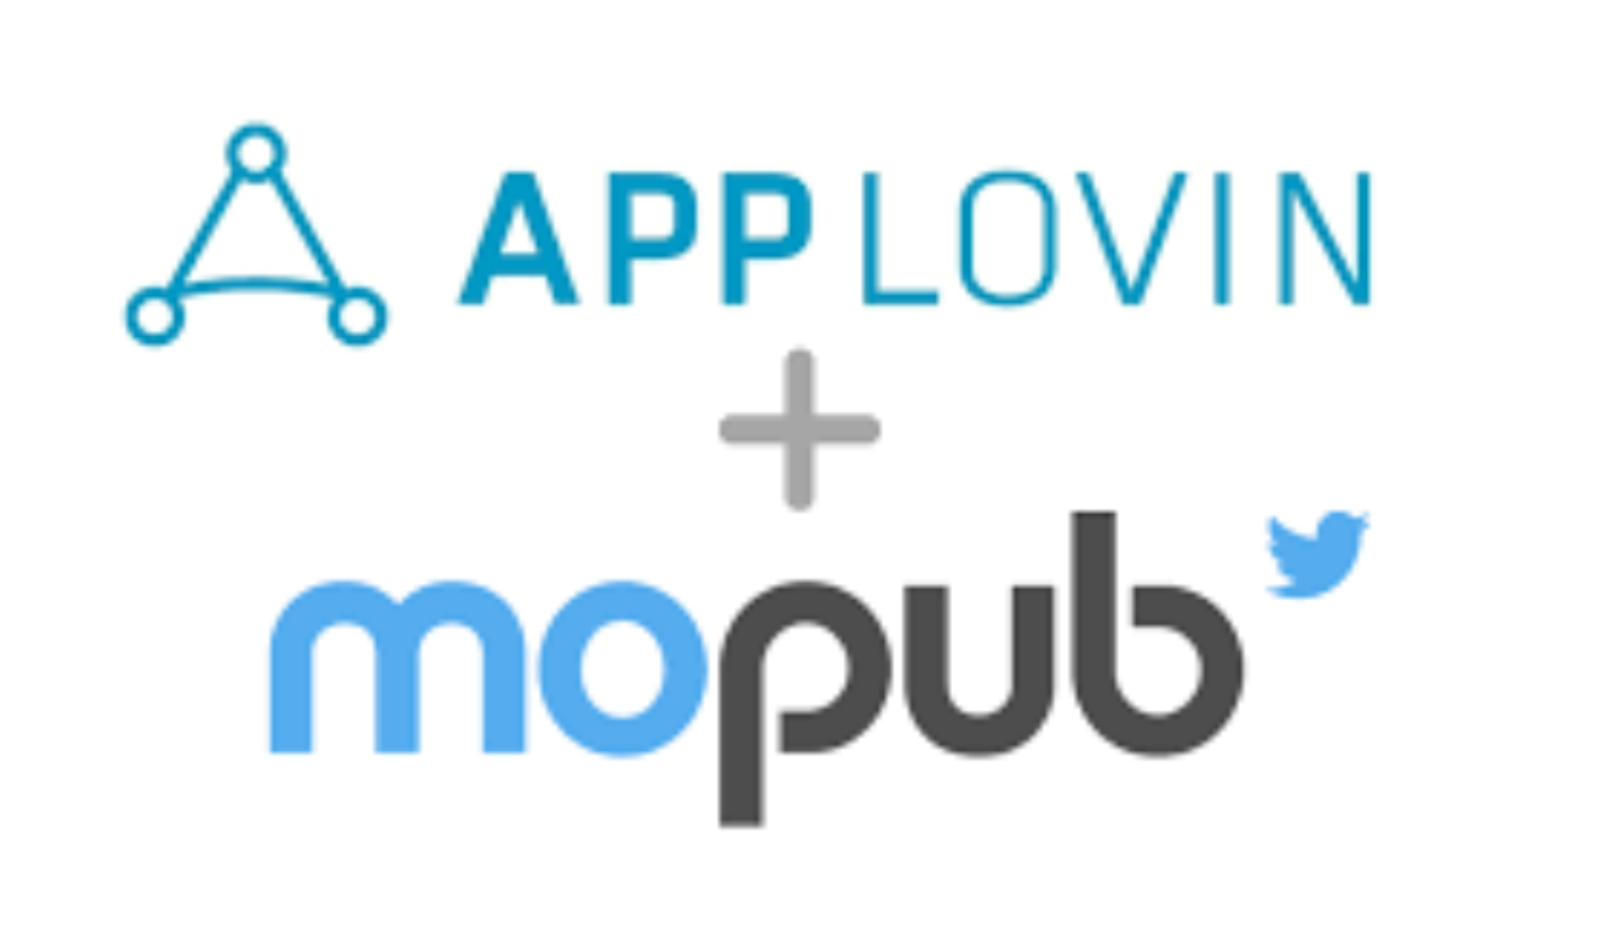 AppLovin Closes Acquisition of Twitter’s MoPub Business For $1.05 Billion